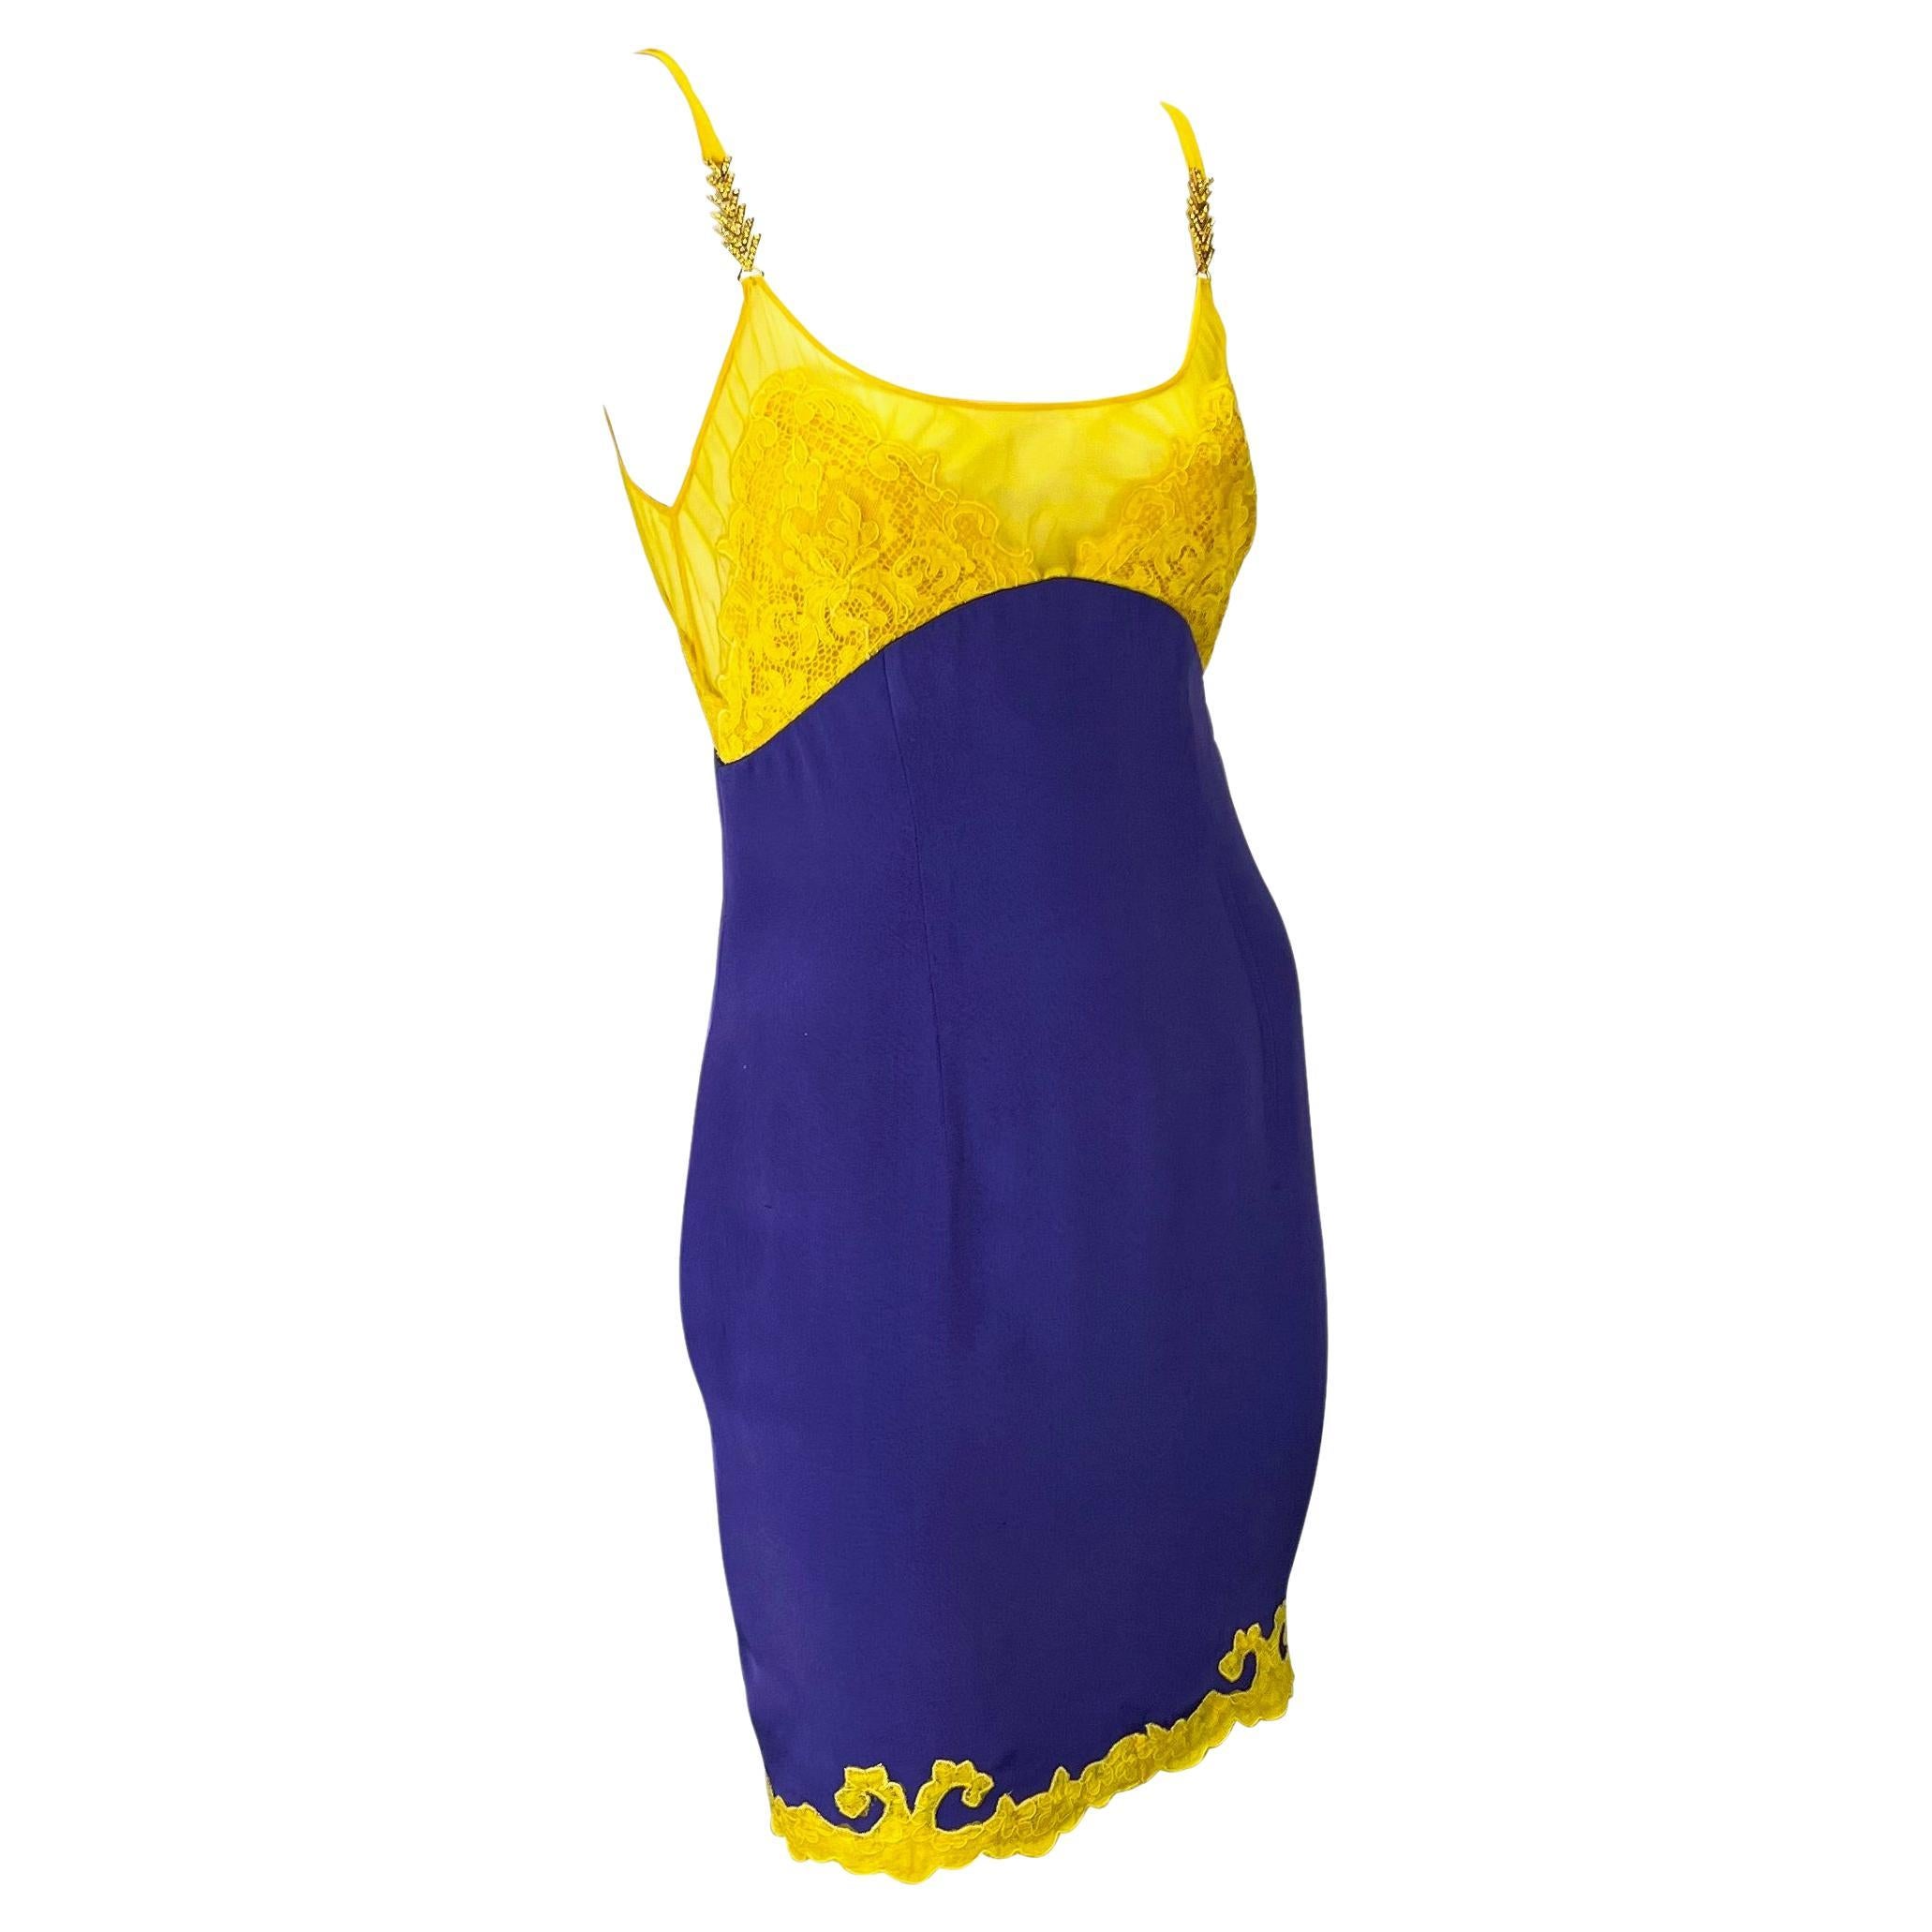 F/W 1996 Gianni Versace Couture Purple Satin Yellow Lace Rhinestone Slip Dress For Sale 2